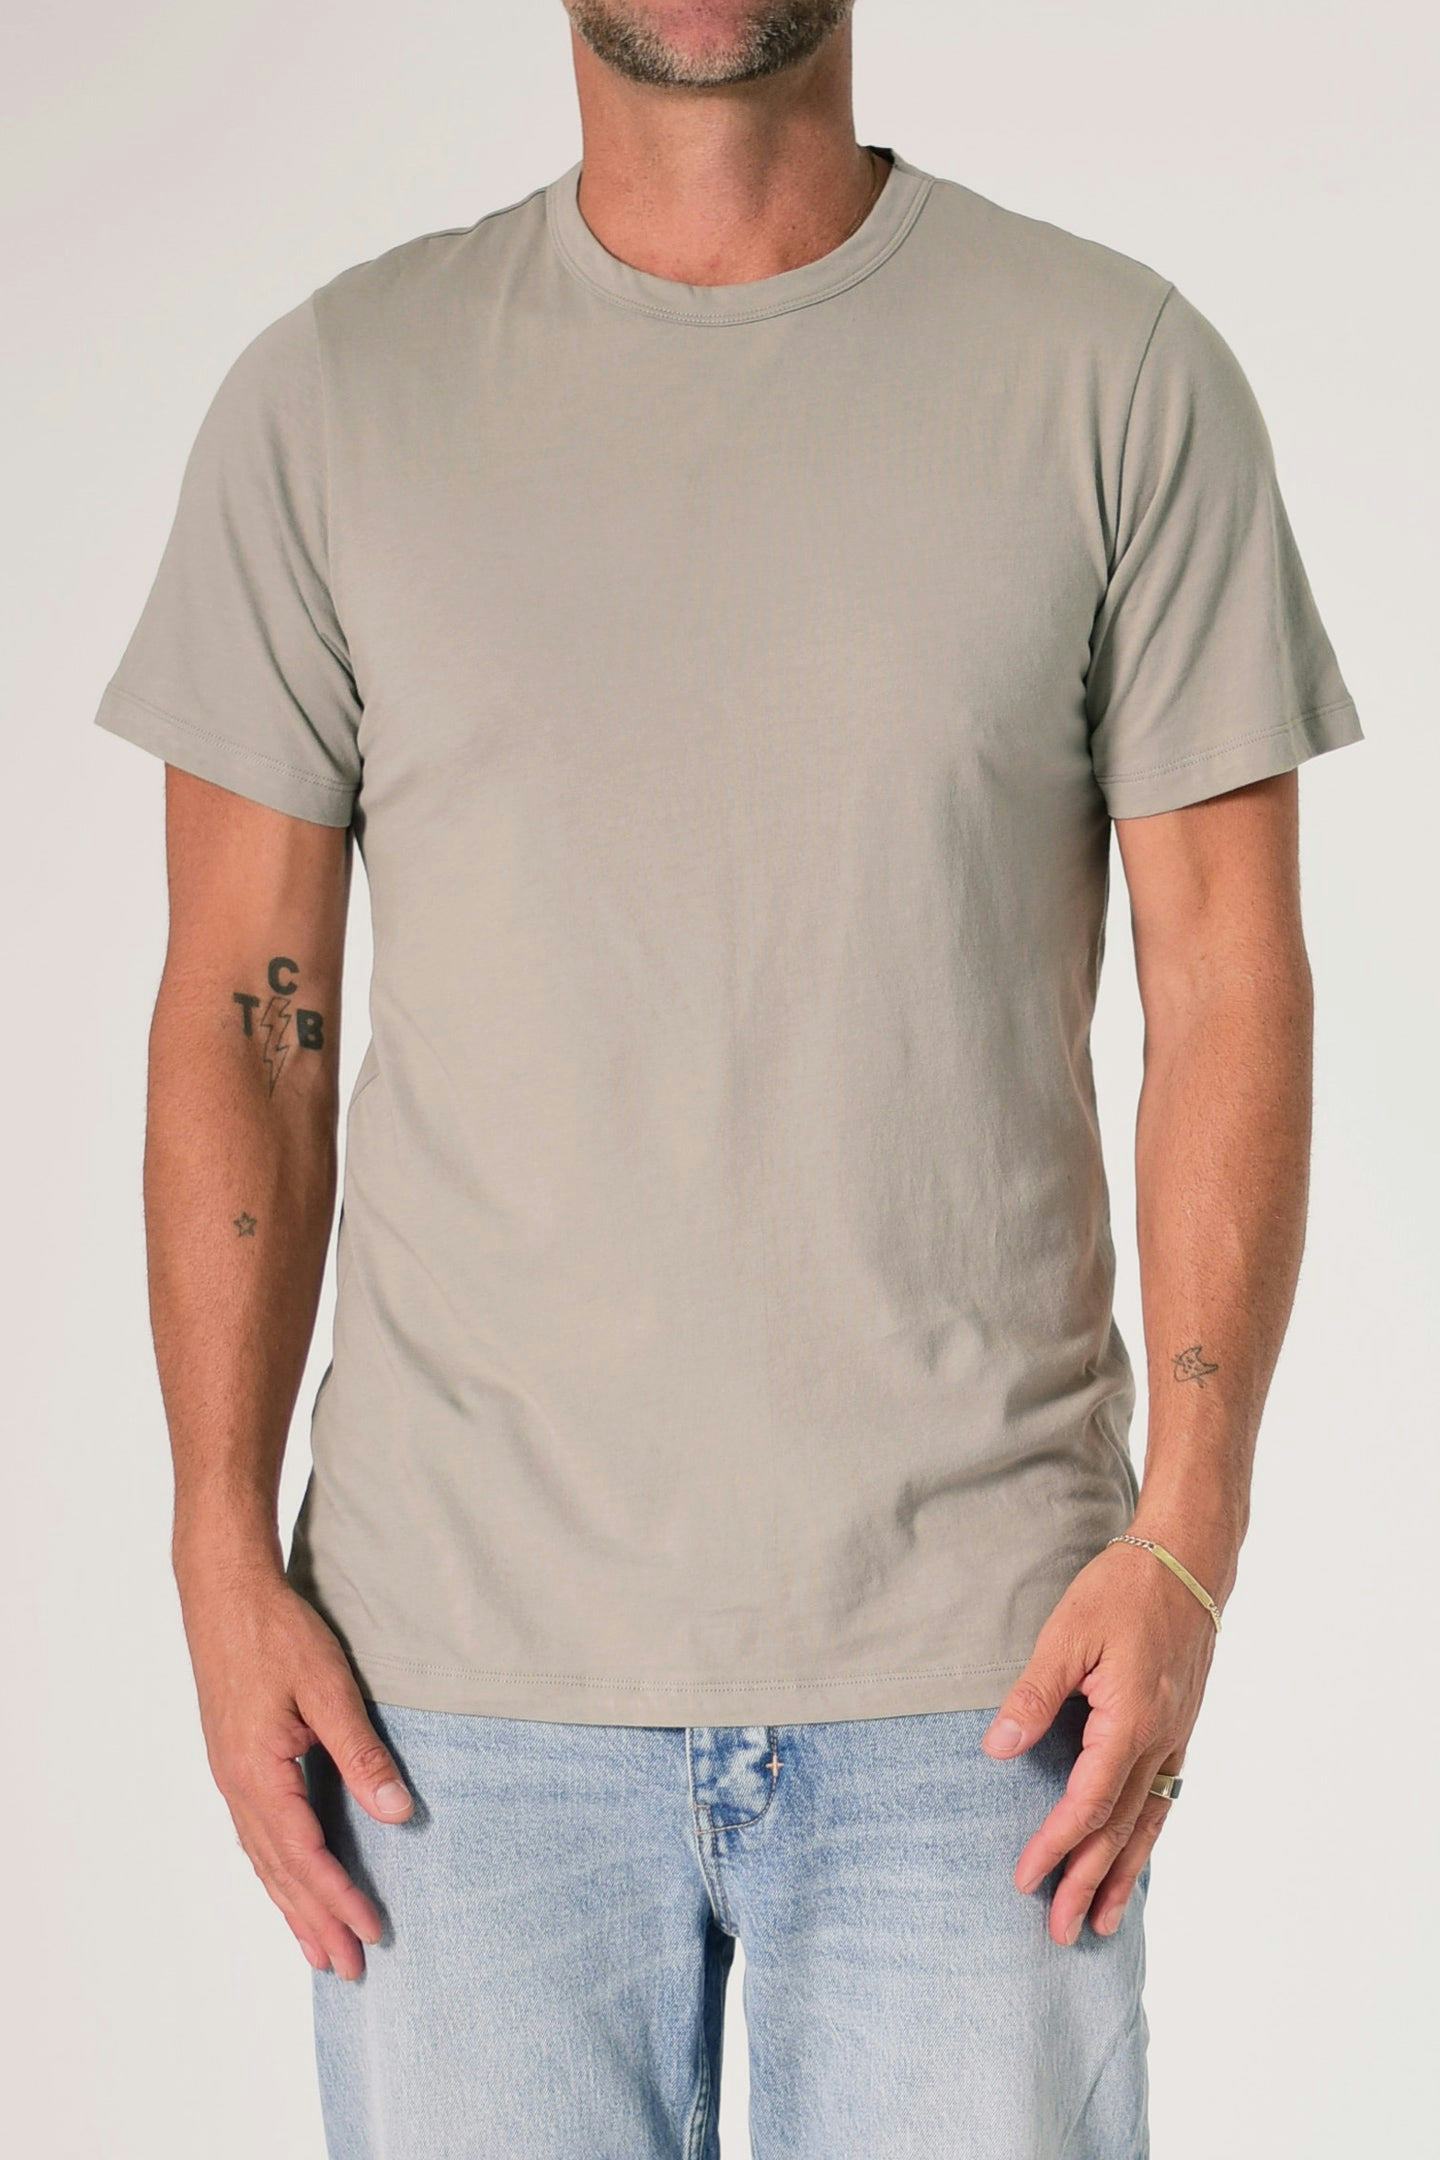 Layer Tee - Cement Neuw relaxed darkgrey mens-t-shirt 